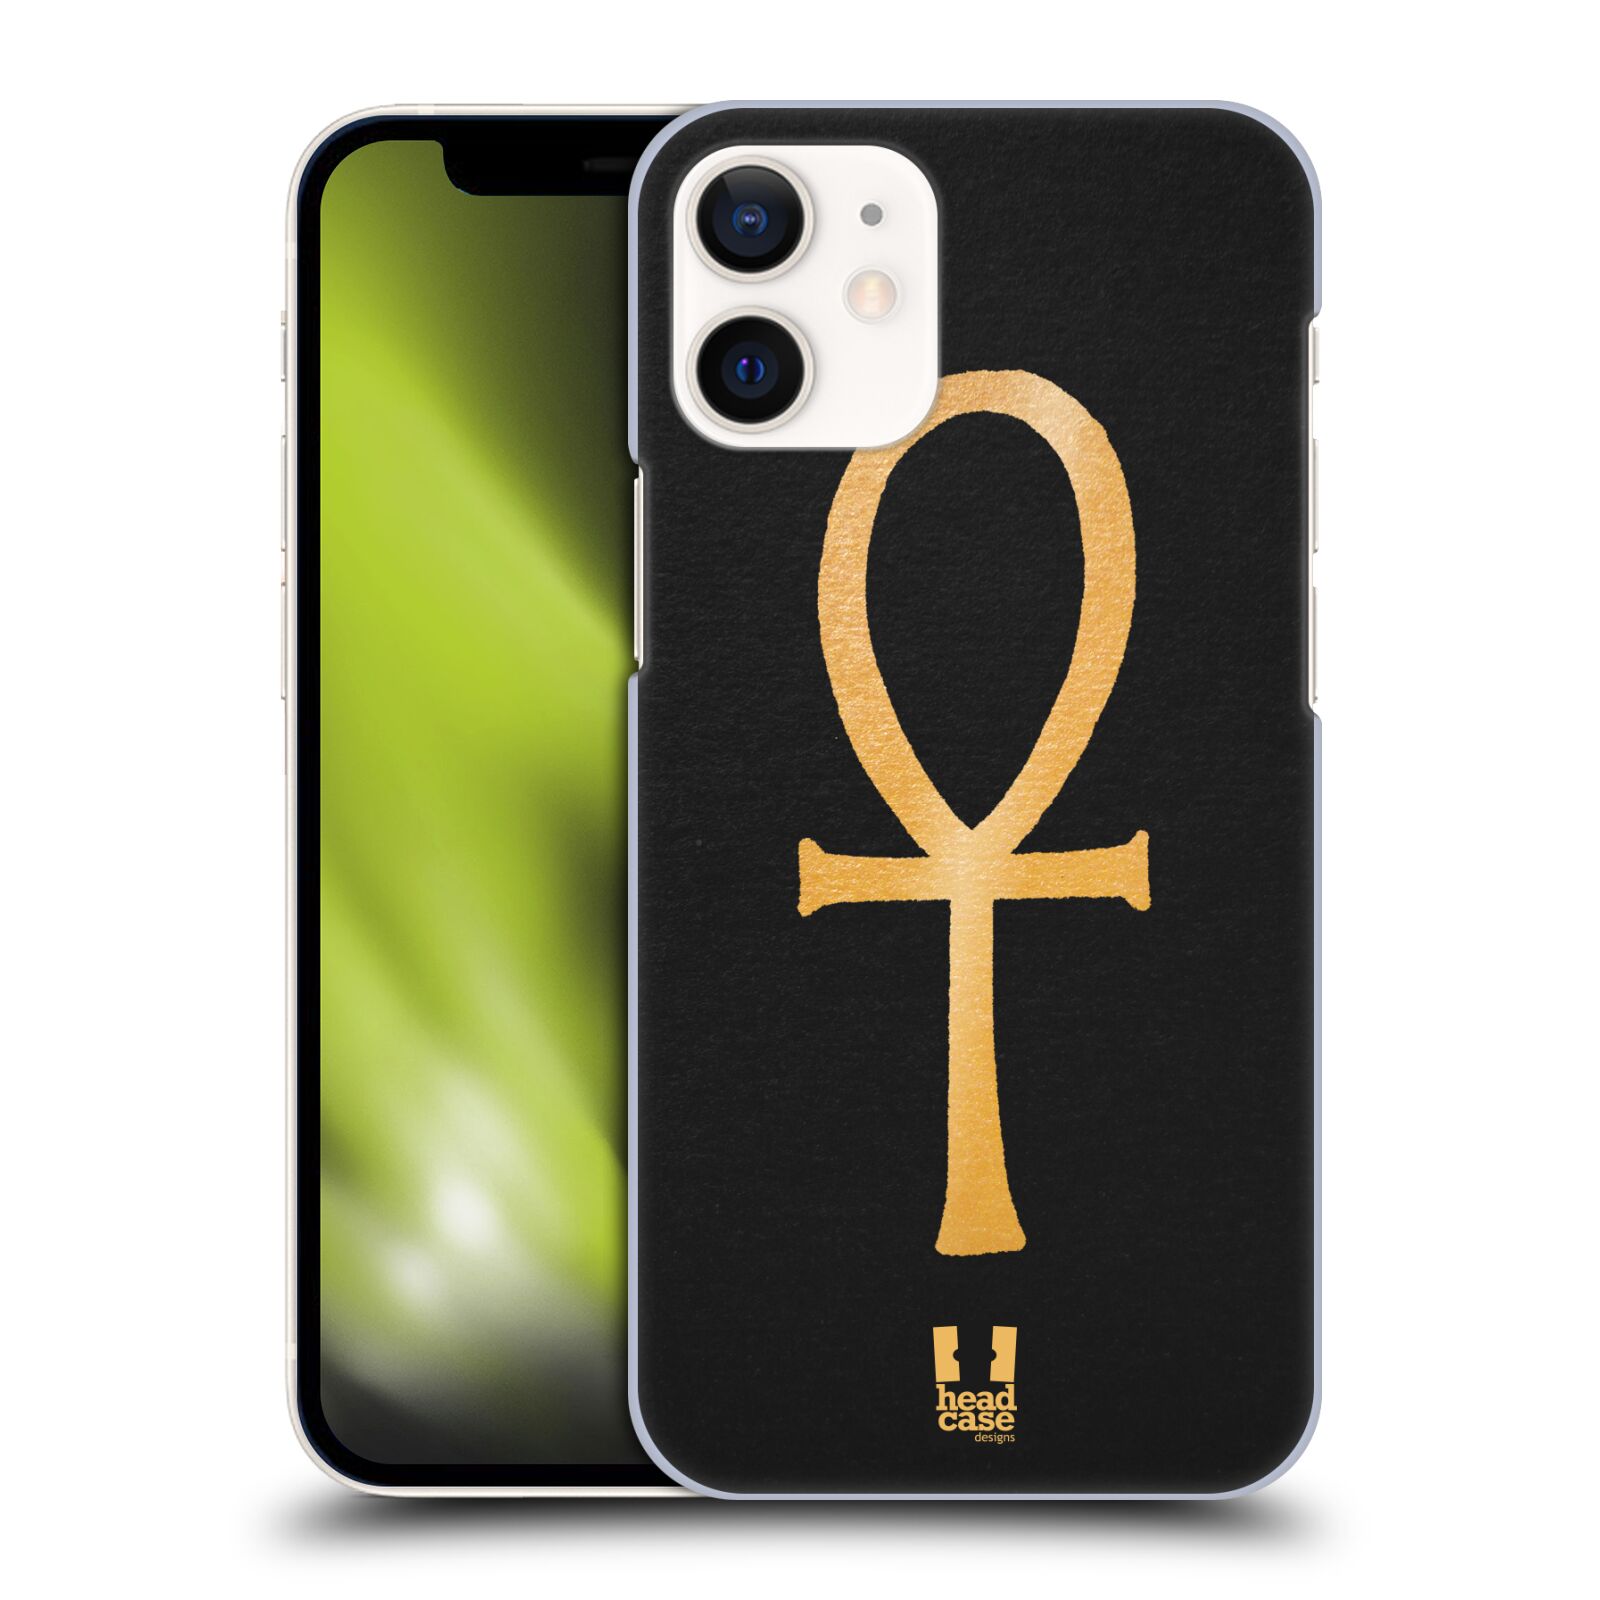 Plastový obal na mobil Apple Iphone 12 MINI vzor EGYPT zlatá a černá SYMBOL ŽIVOTA